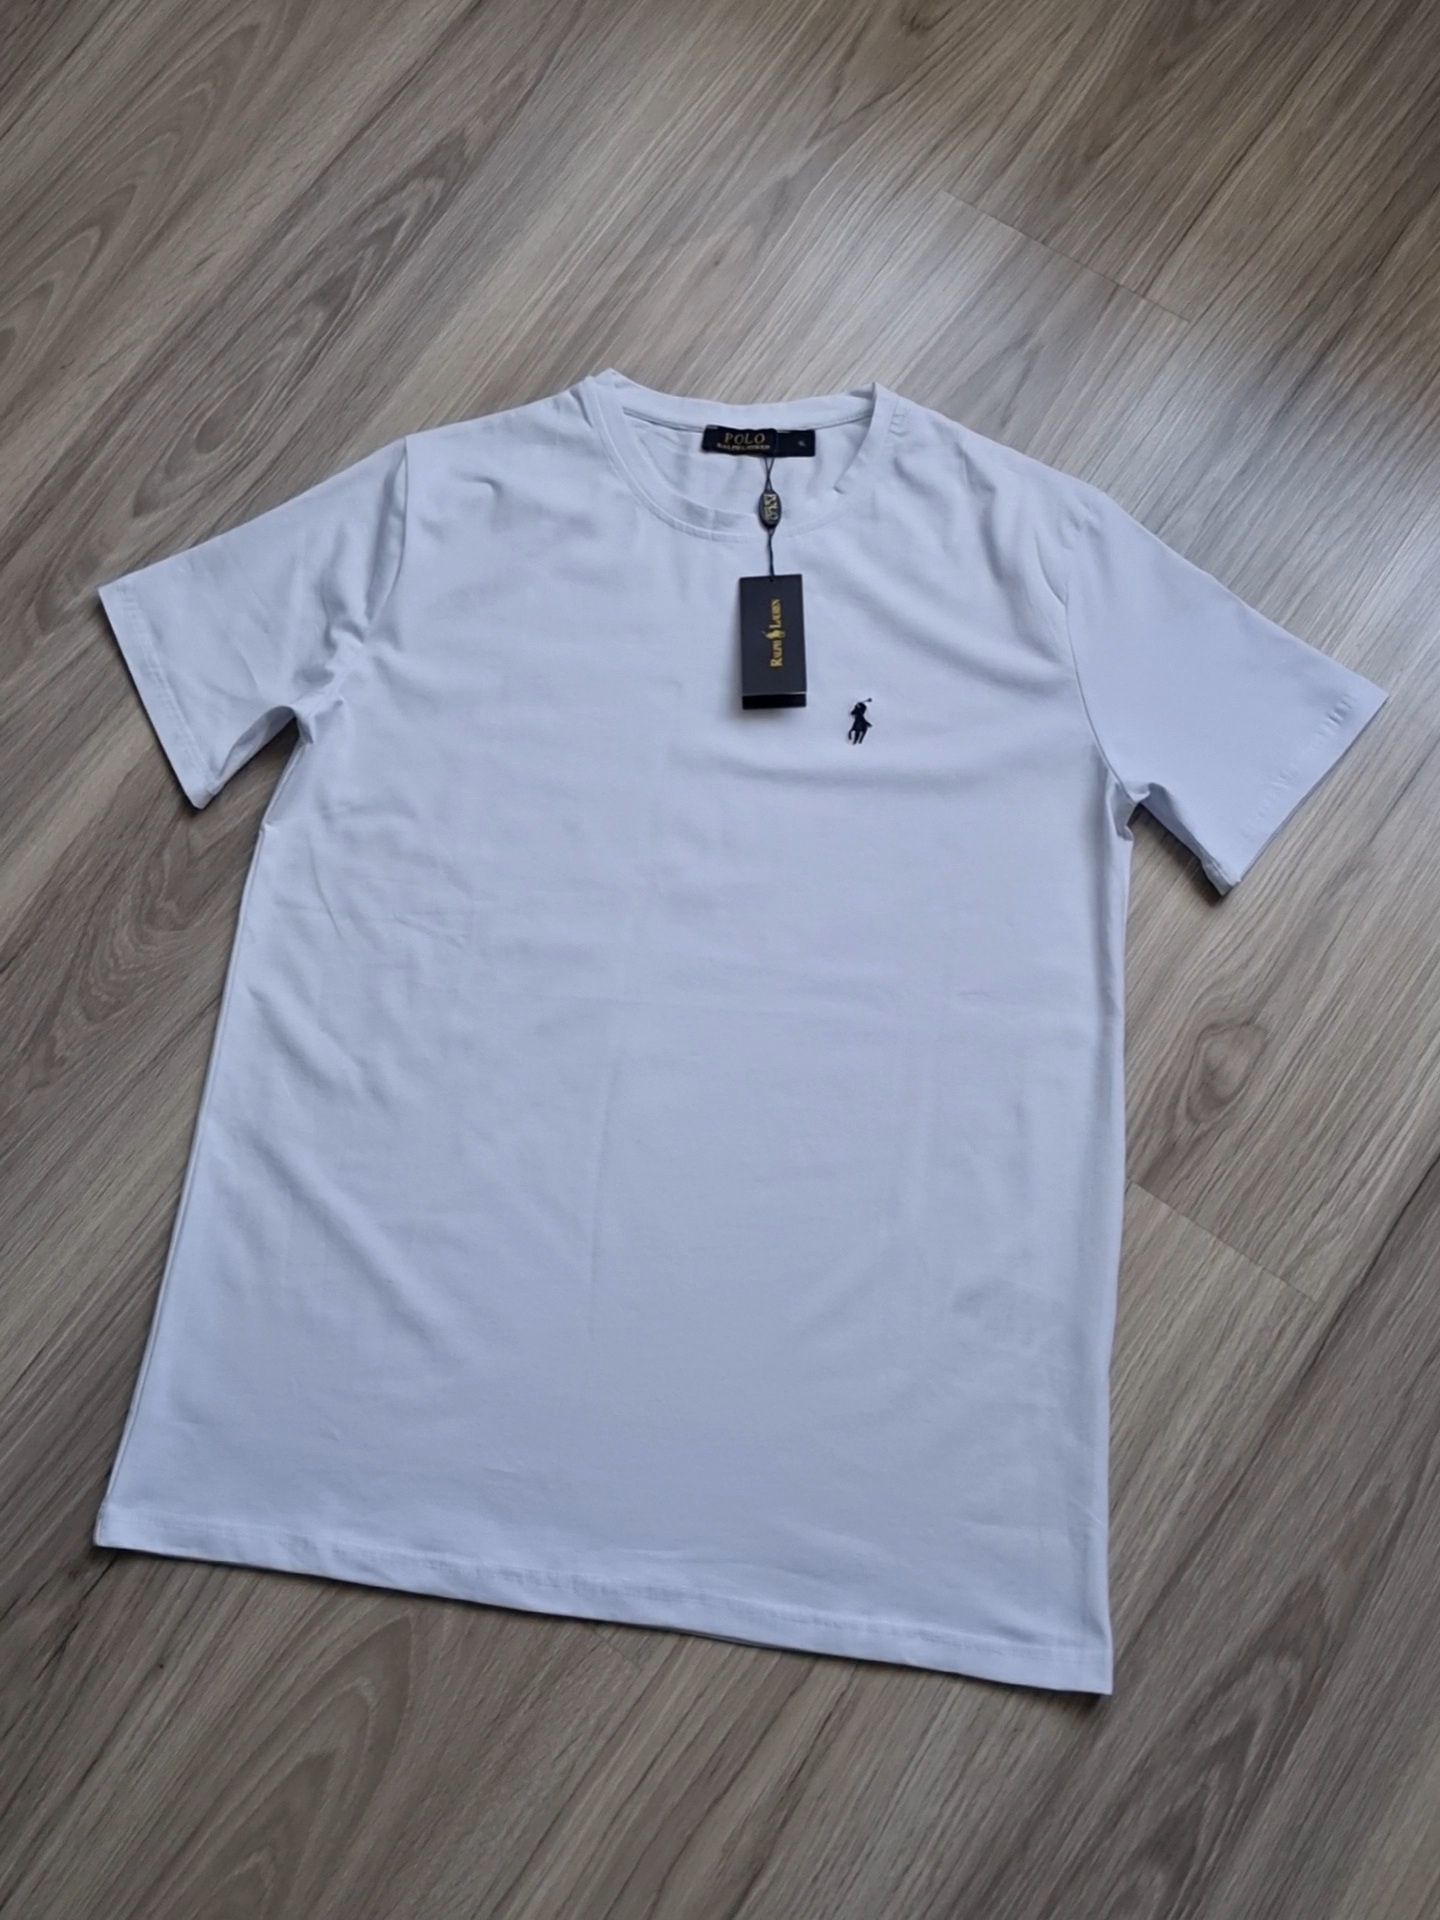 T-shirt/koszulka męska biała Ralph Lauren rozmiar XXL - Polecam!